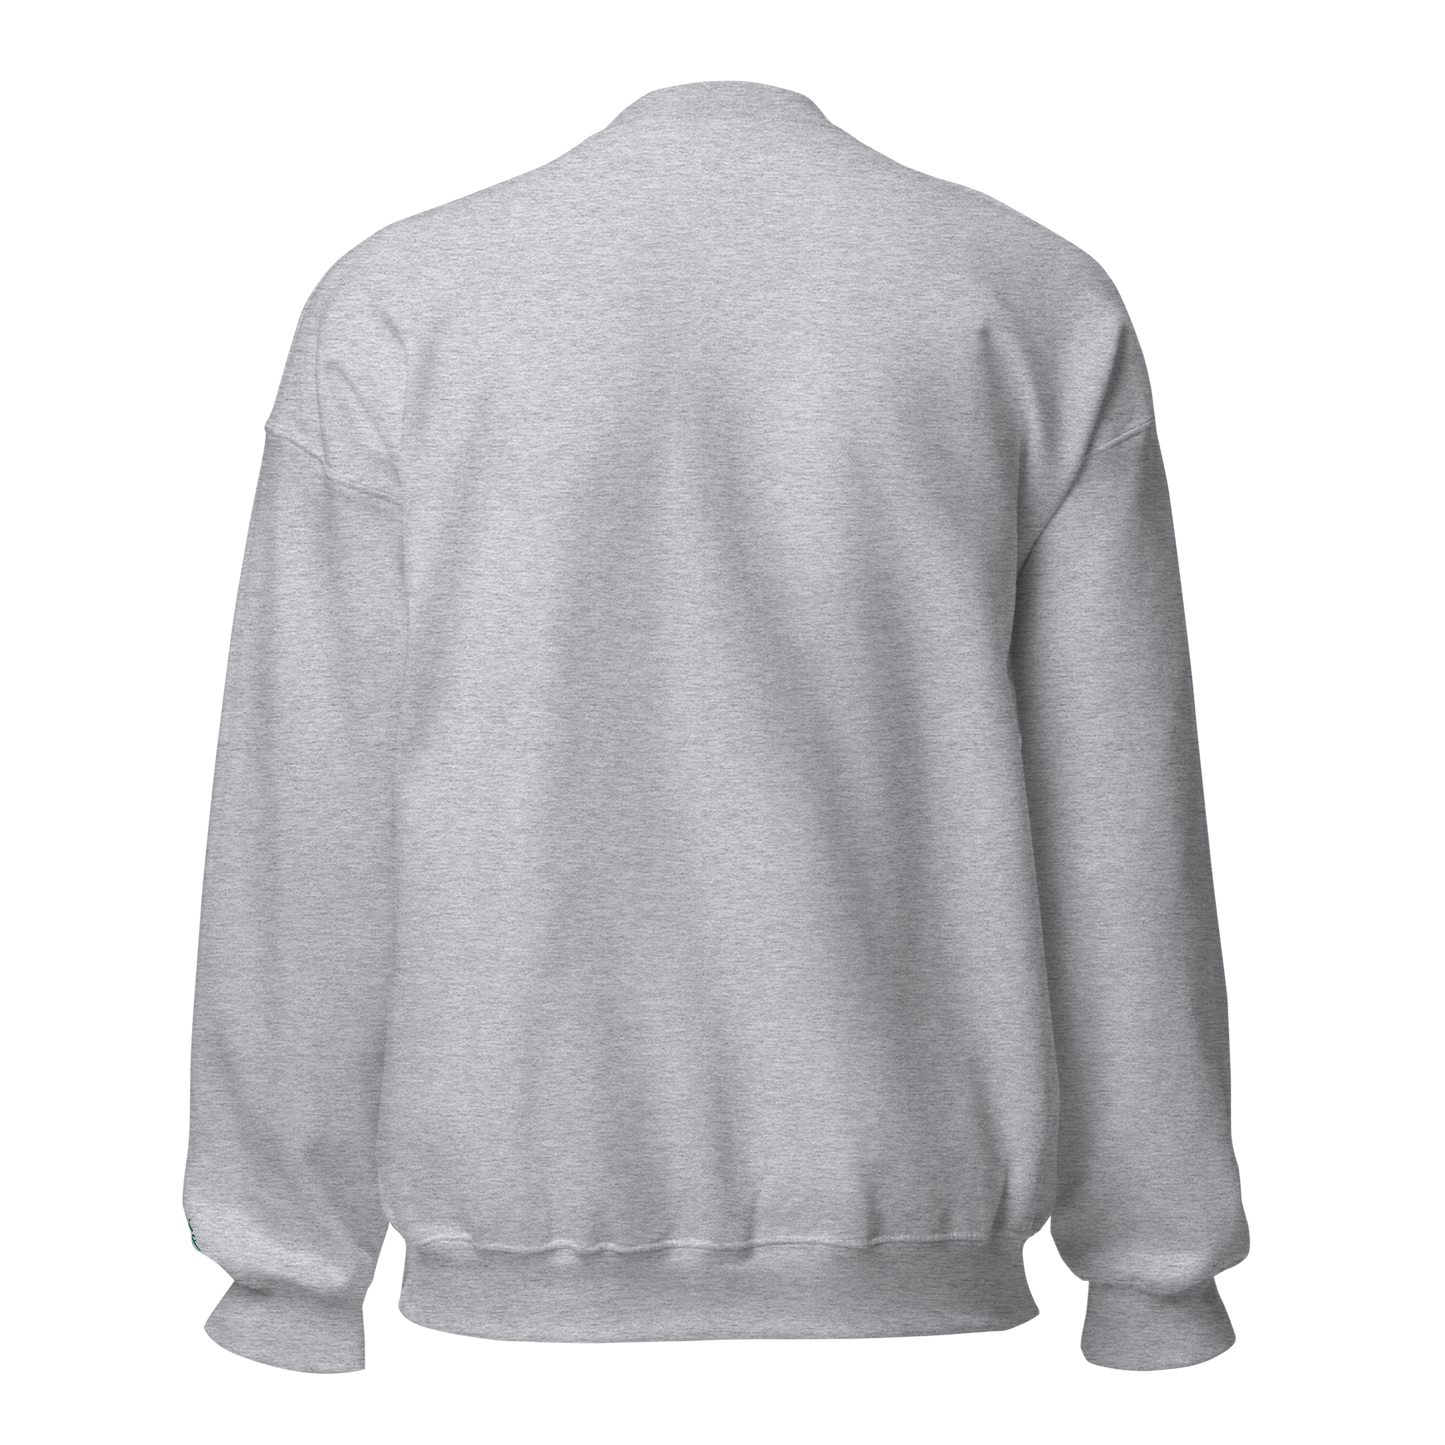 "Not a Chef" Embroidered Crewneck Sweatshirt - Grey